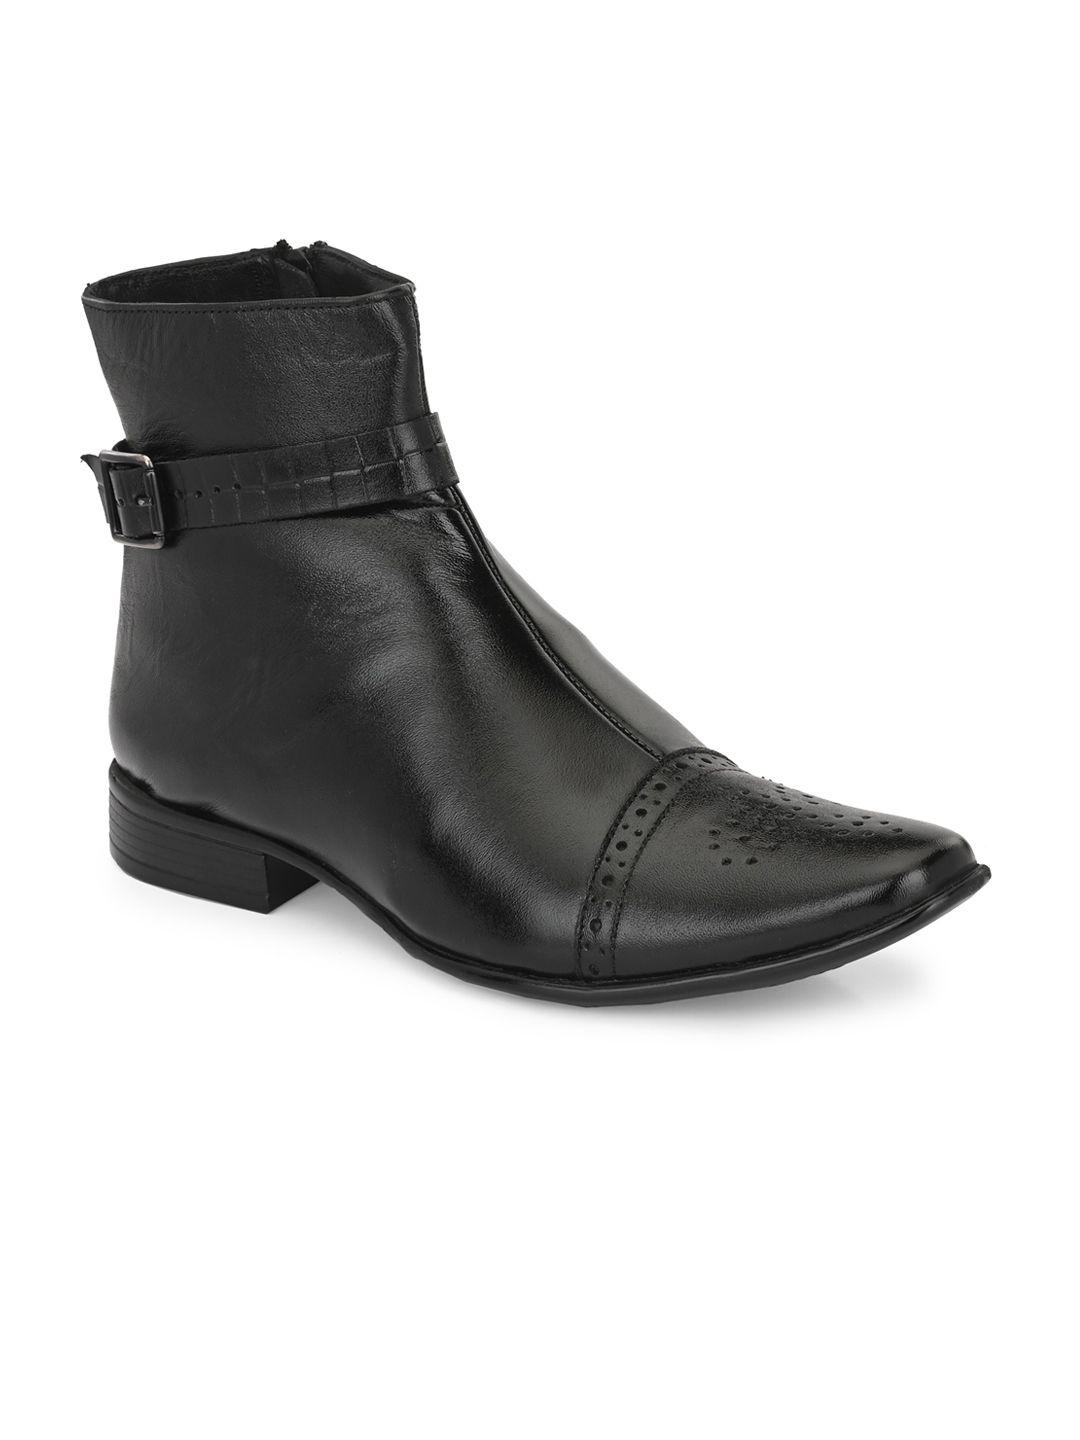 eego italy men textured genuine leather regular boots